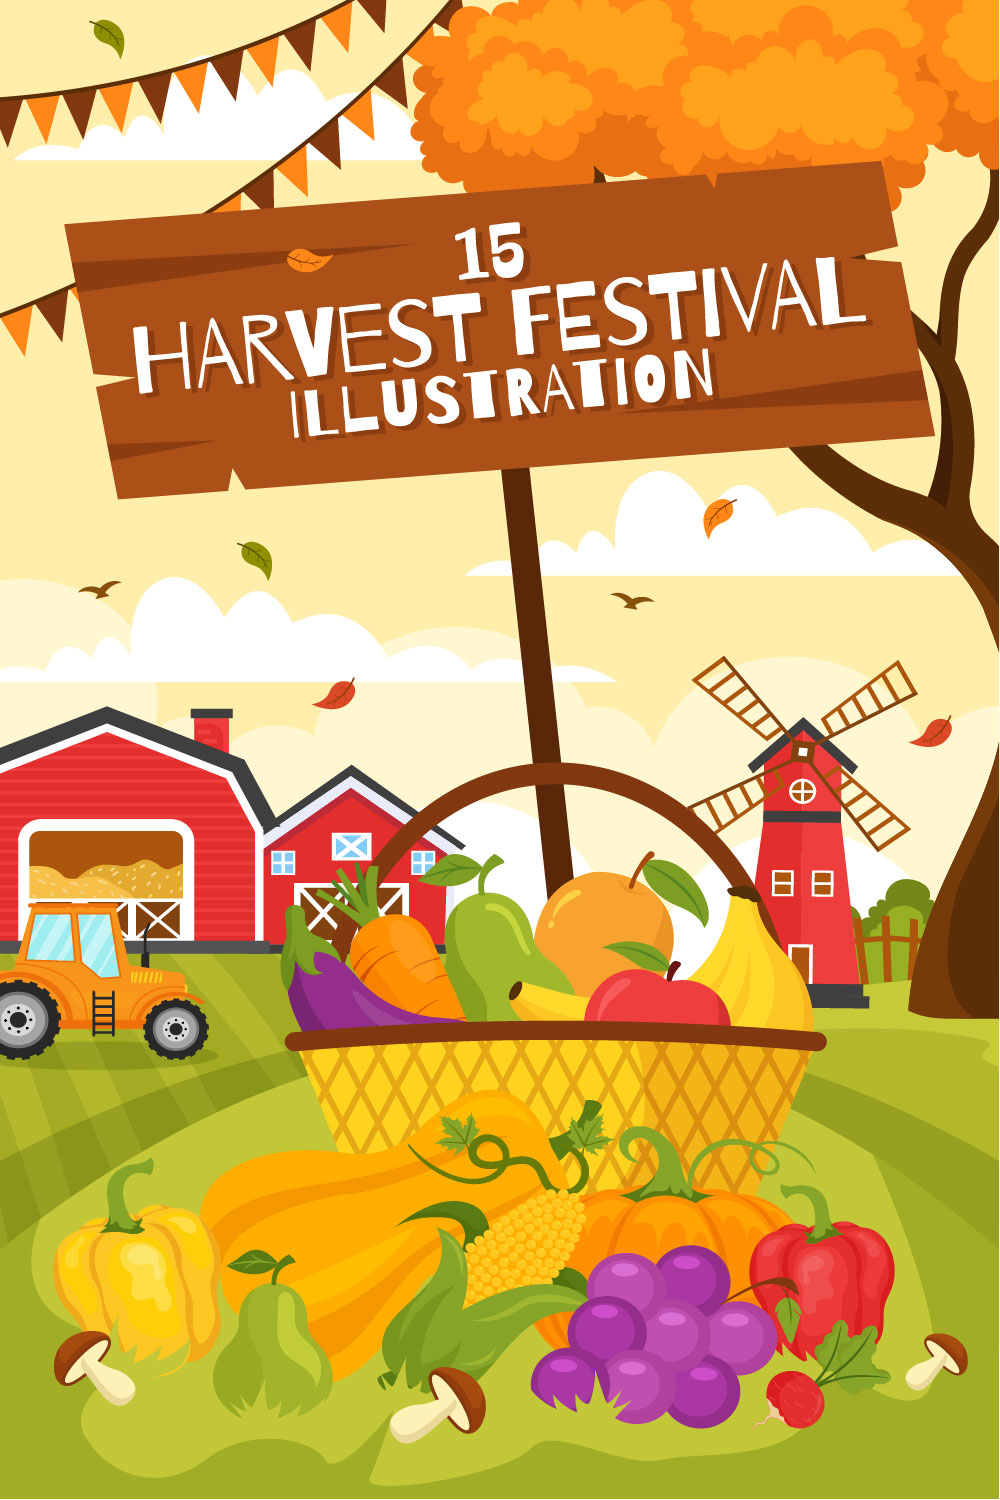 15 Happy Harvest Festival Illustration pinterest preview image.